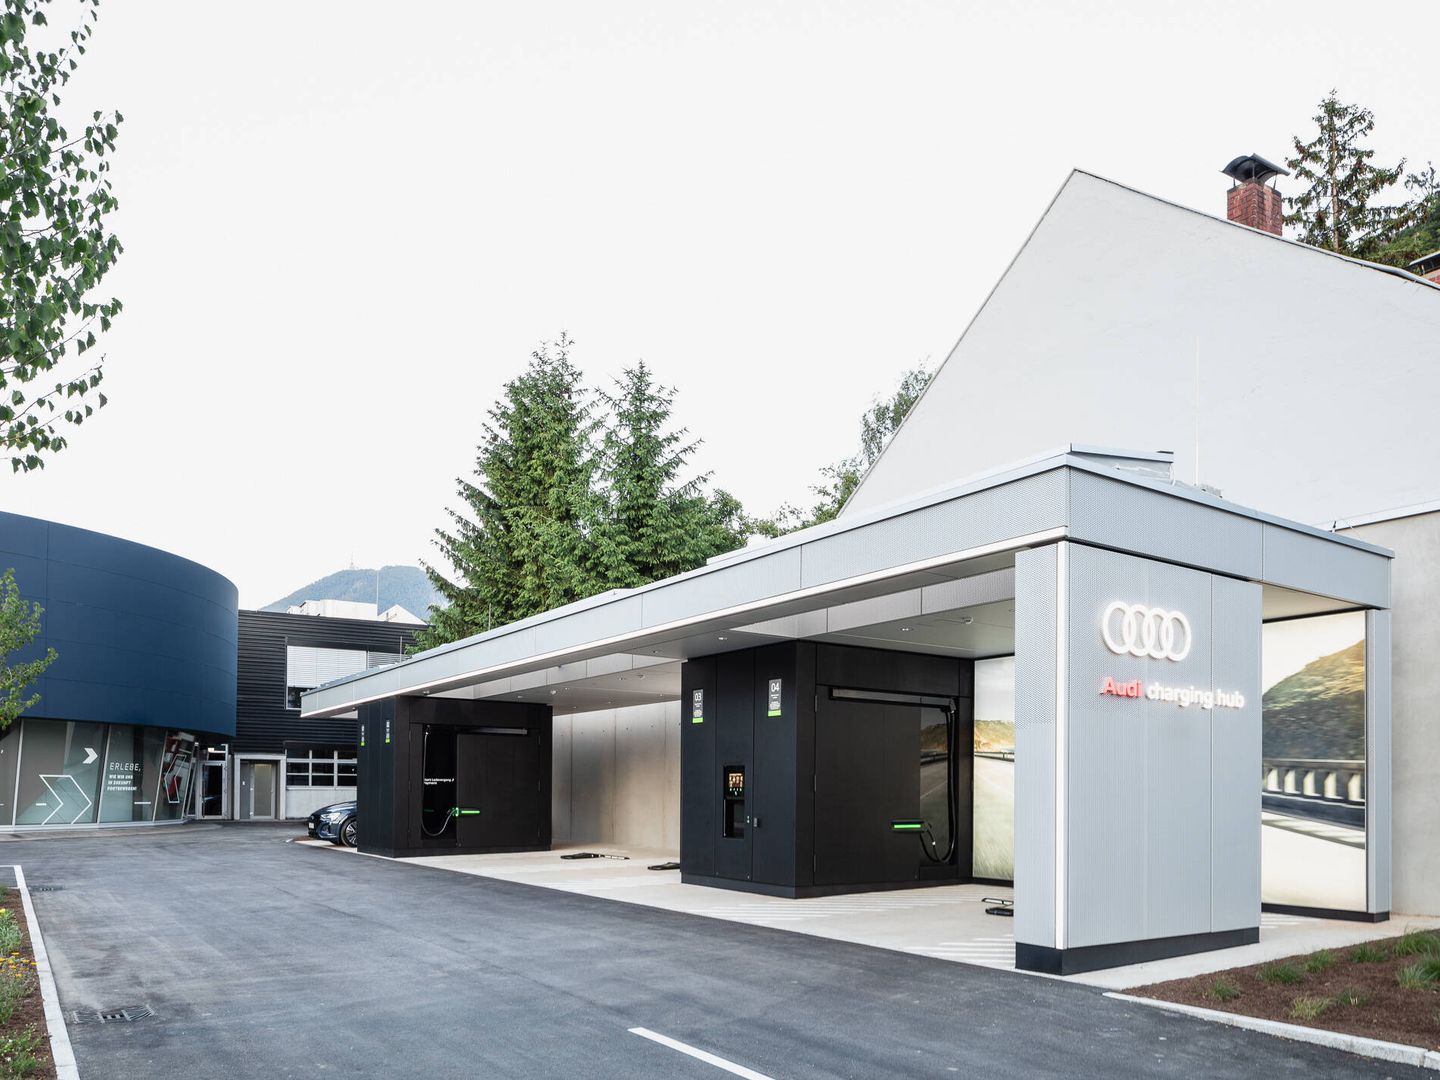 Audi ya tiene este concepto de estación de carga en ciudades como Zúrich, Berlín o Salzburgo.